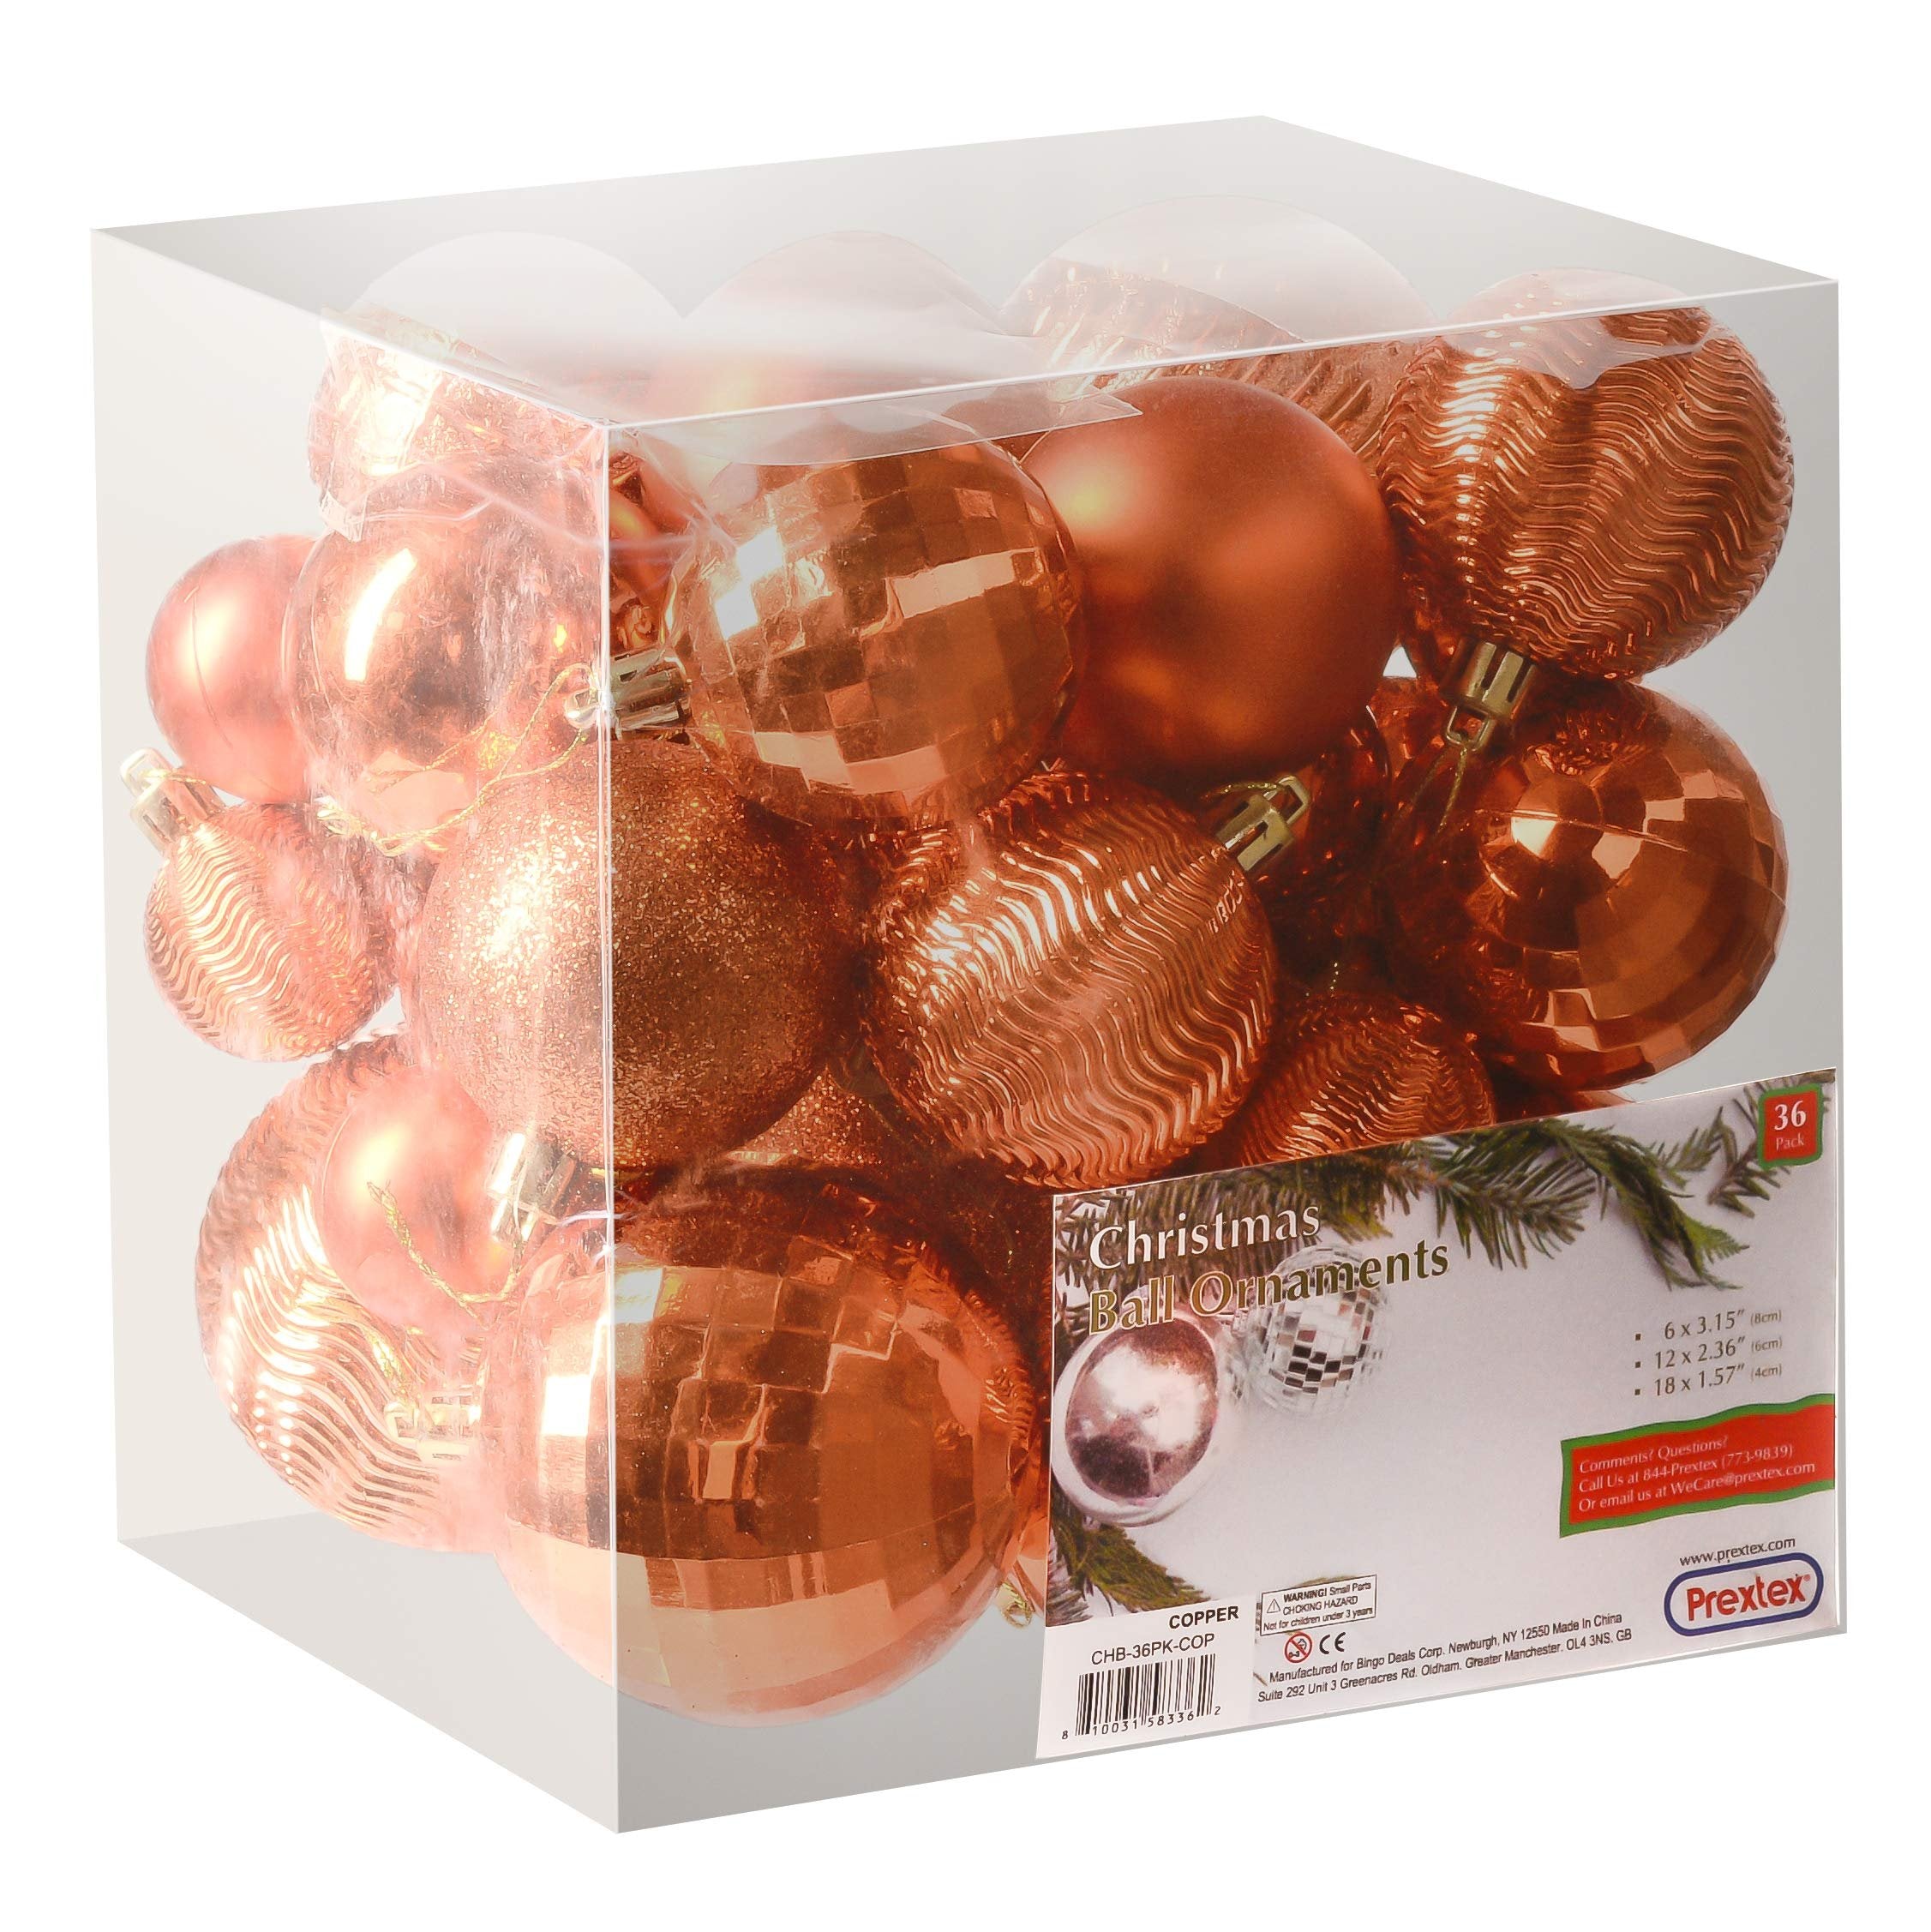 PREXTEX Christmas Tree Ornaments - Copper Orange Christmas Ball Ornaments Set for Christmas, Holiday, Wreath & Party Decorations (36 pcs - Small, Medium, Large) Shatterproof, 3 Size Combo